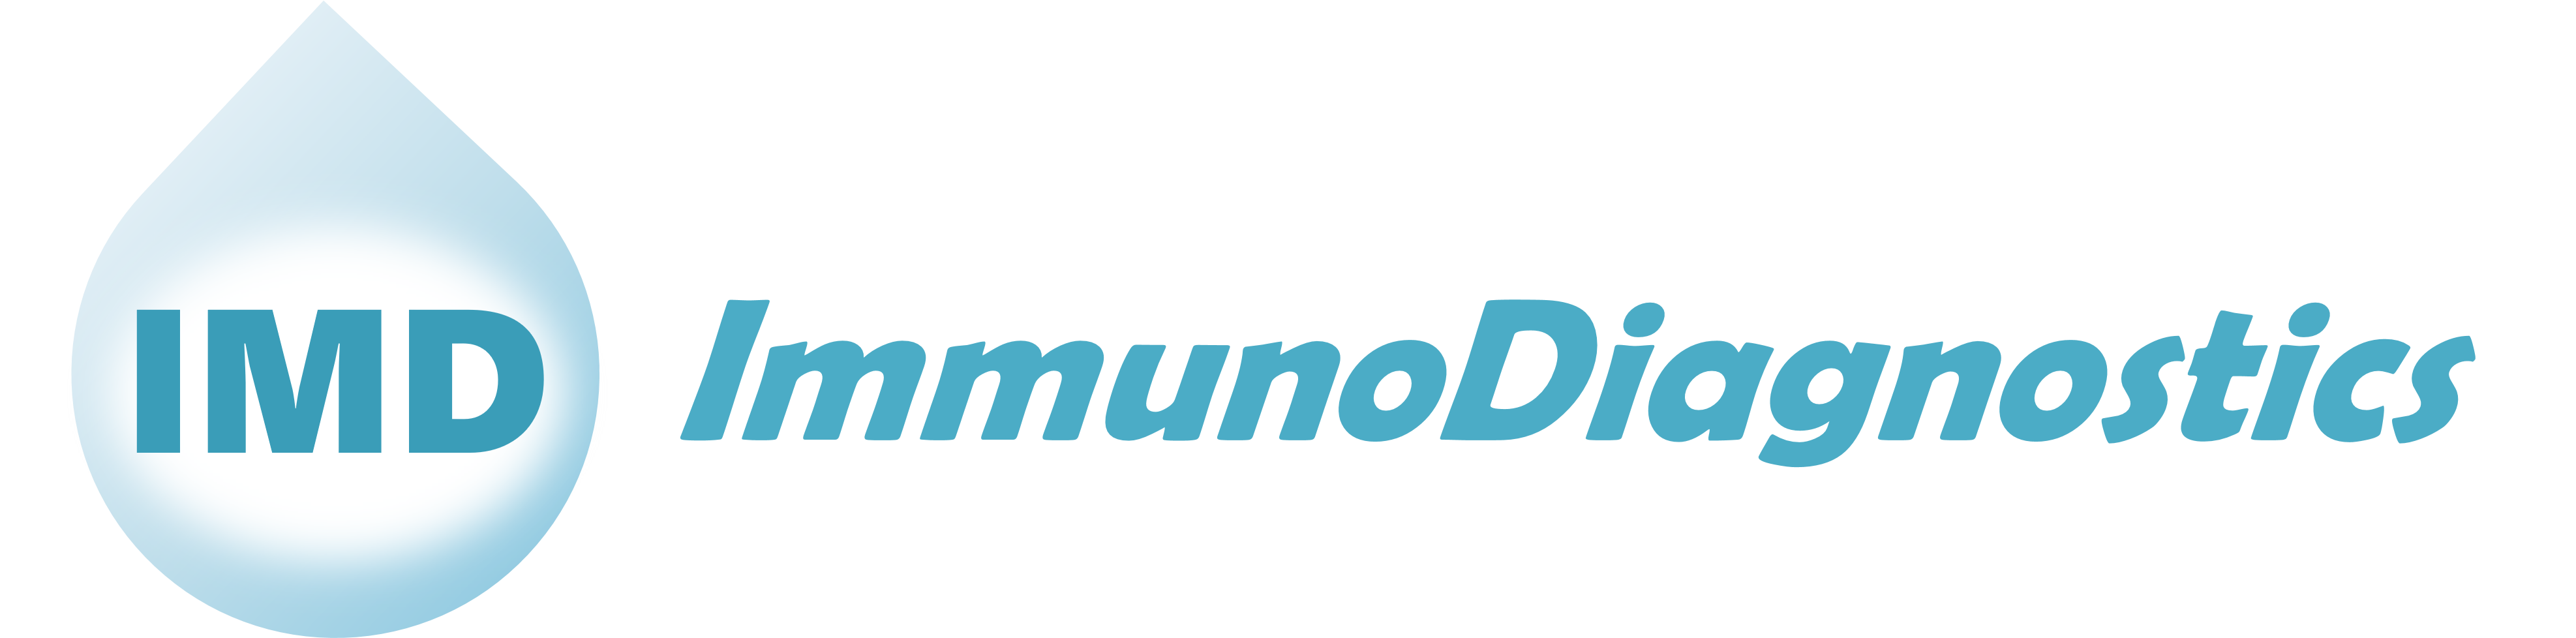 ImmunoDiagnostics Limited Logo